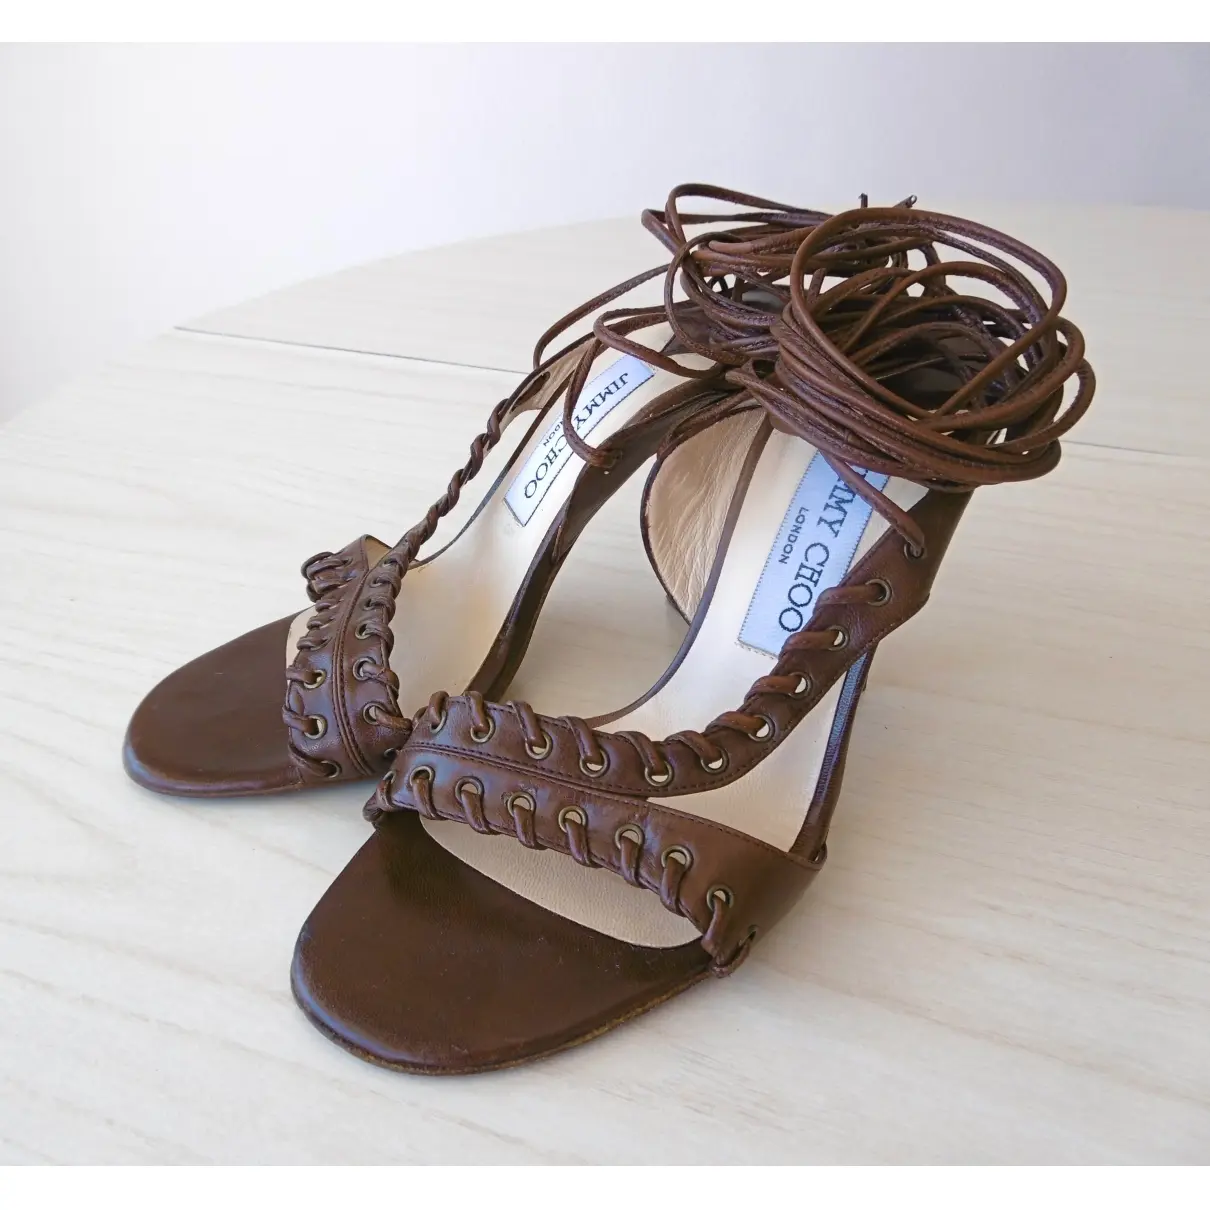 Buy Jimmy Choo Leather sandal online